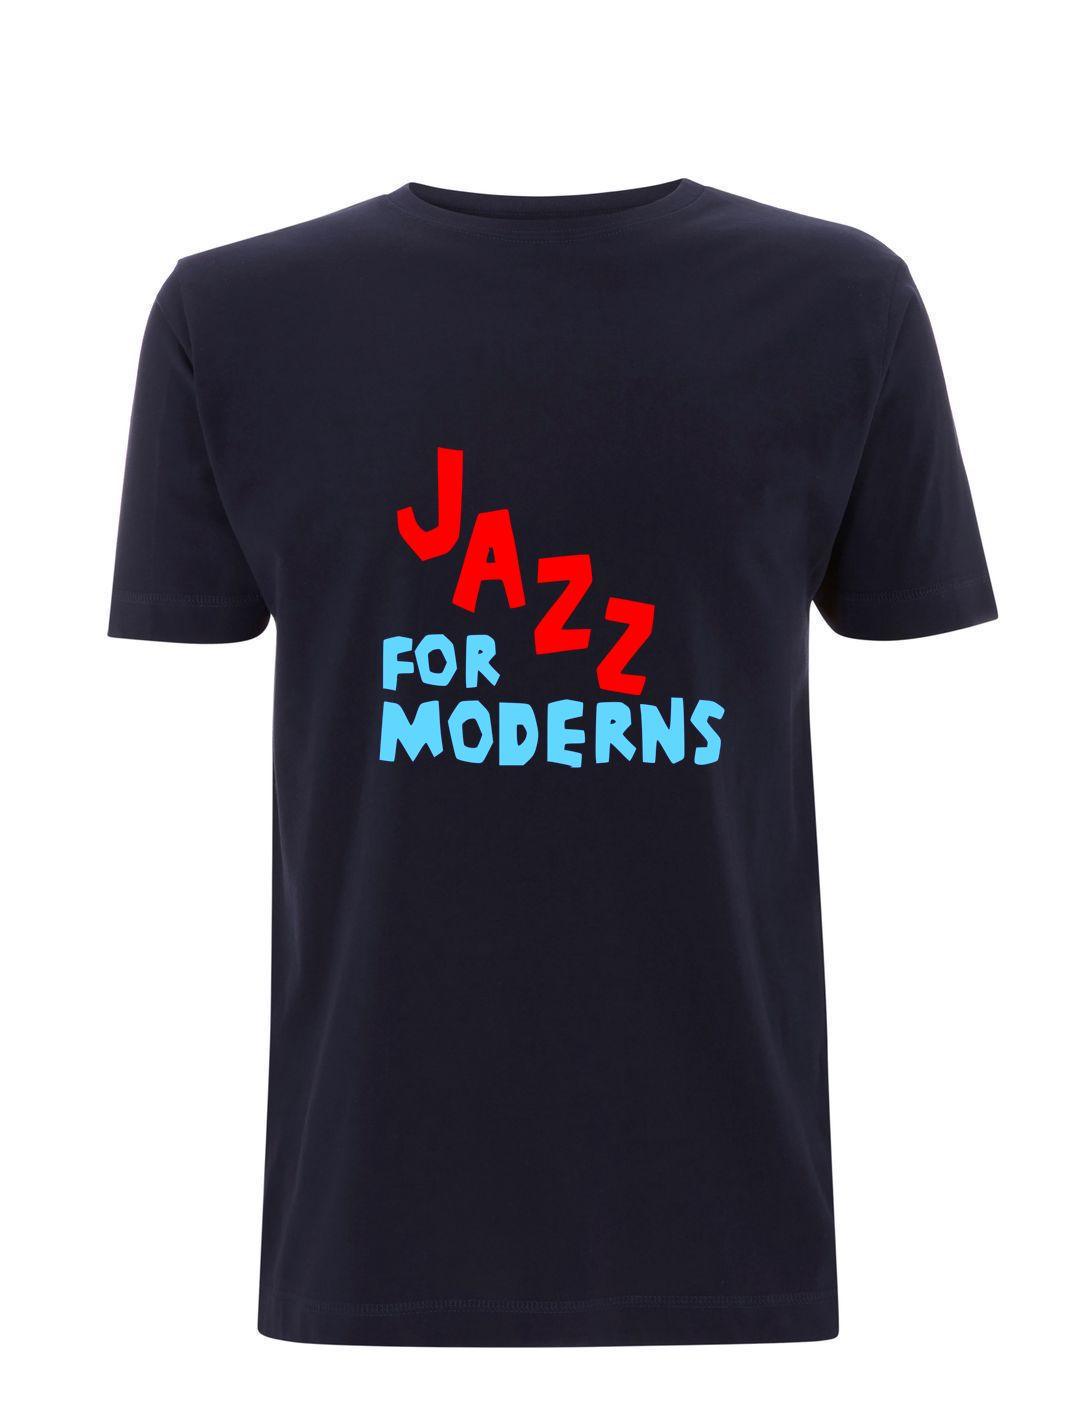 JAZZ FOR MODERNS : Premium Organic T-Shirt Inspired by Mod Jazz & Acid Jazz - Suit Yourself Music